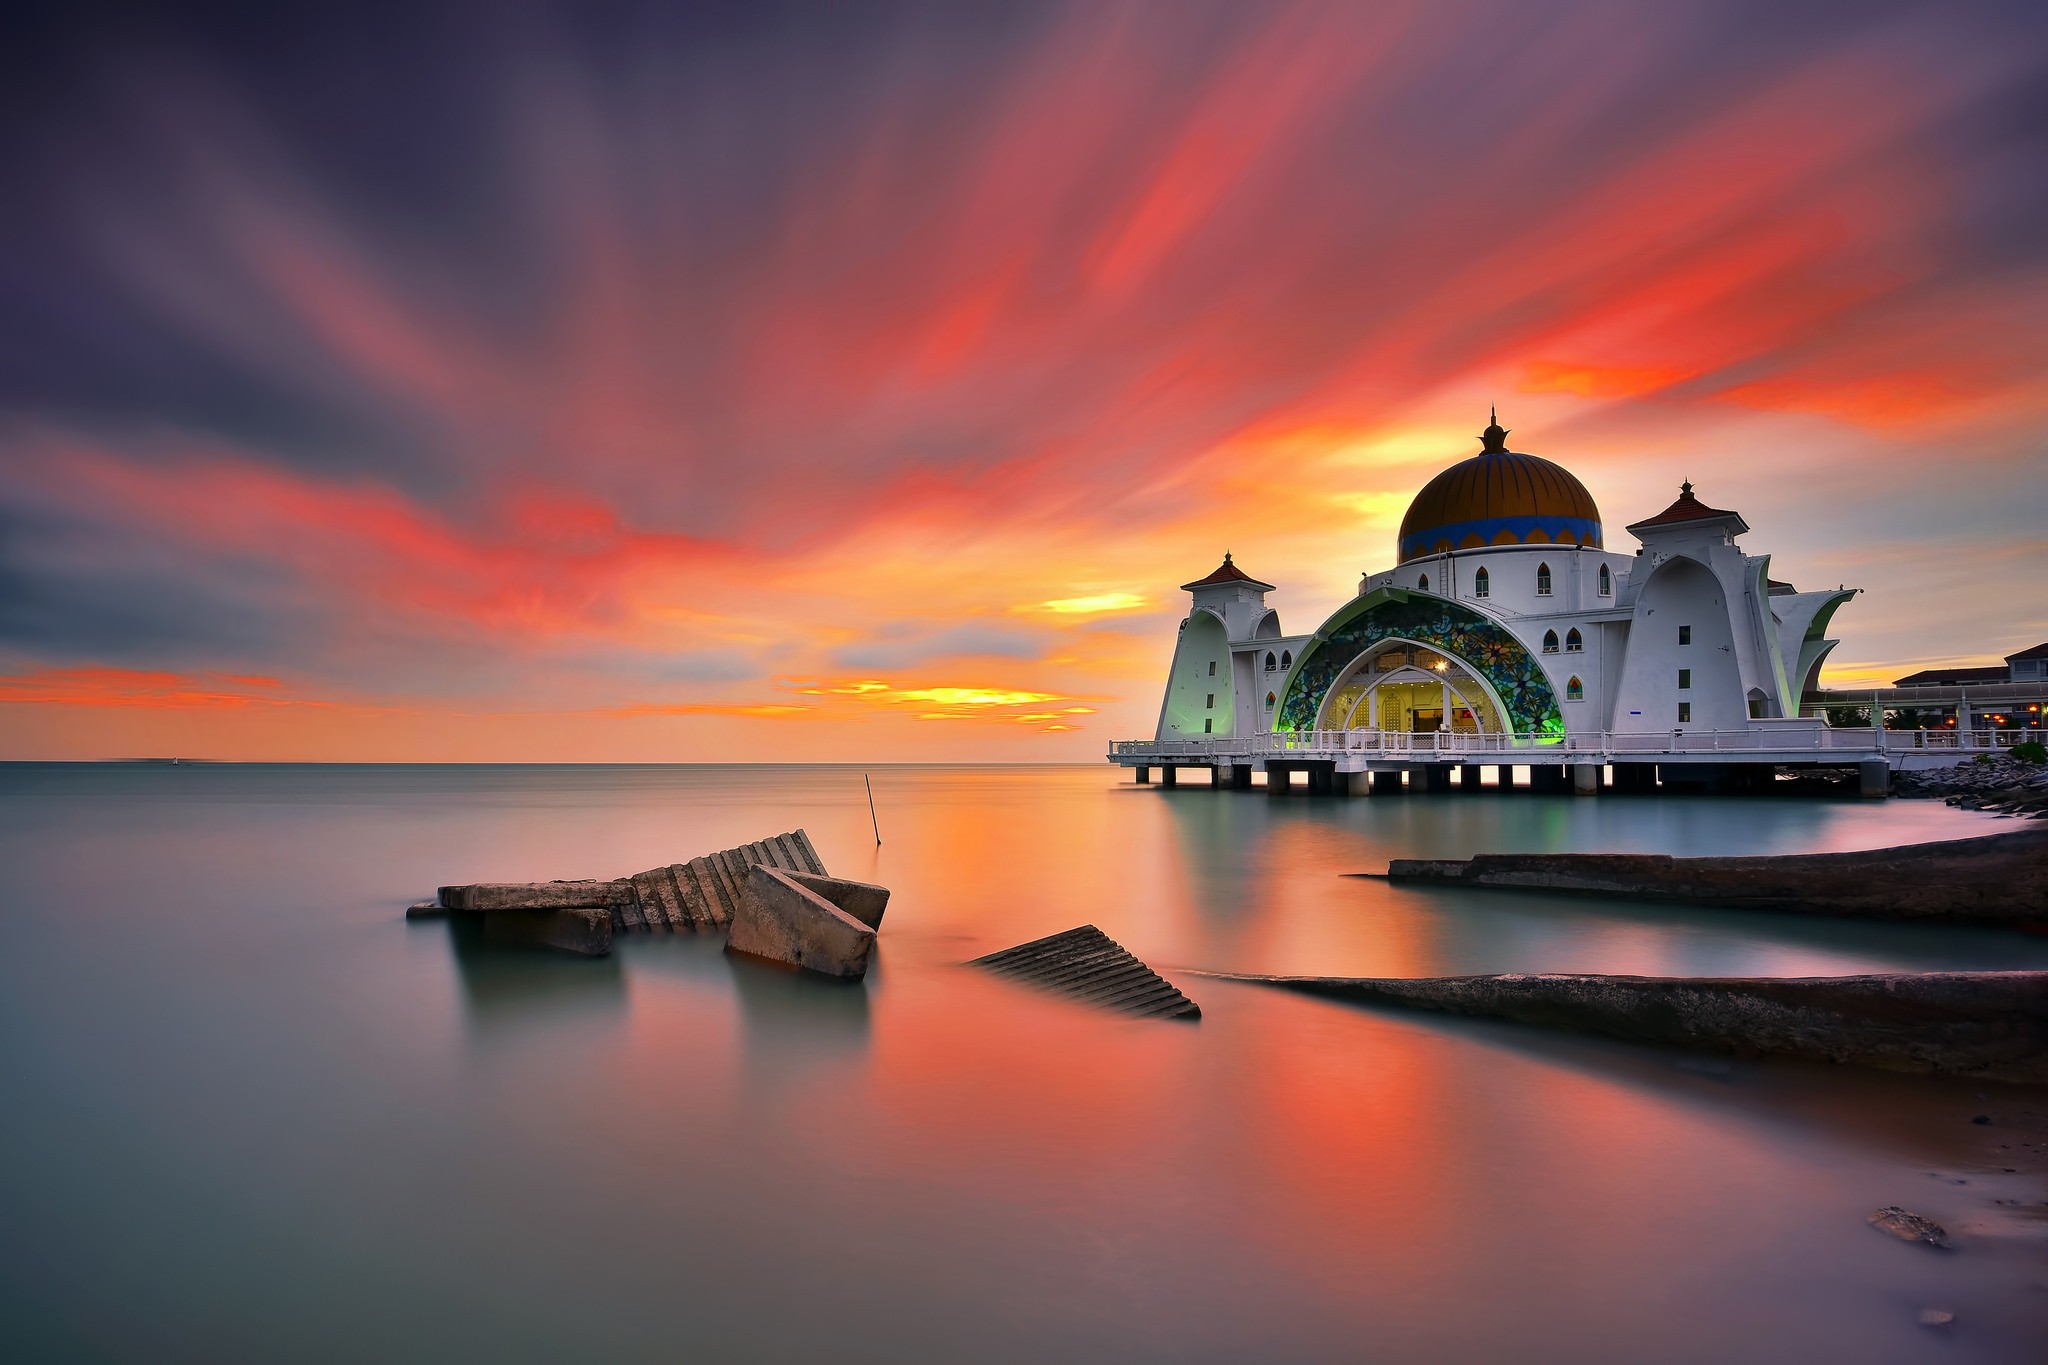 General 2048x1365 mosque Malaysia sea sunset long exposure orange sky sky calm waters building outdoors